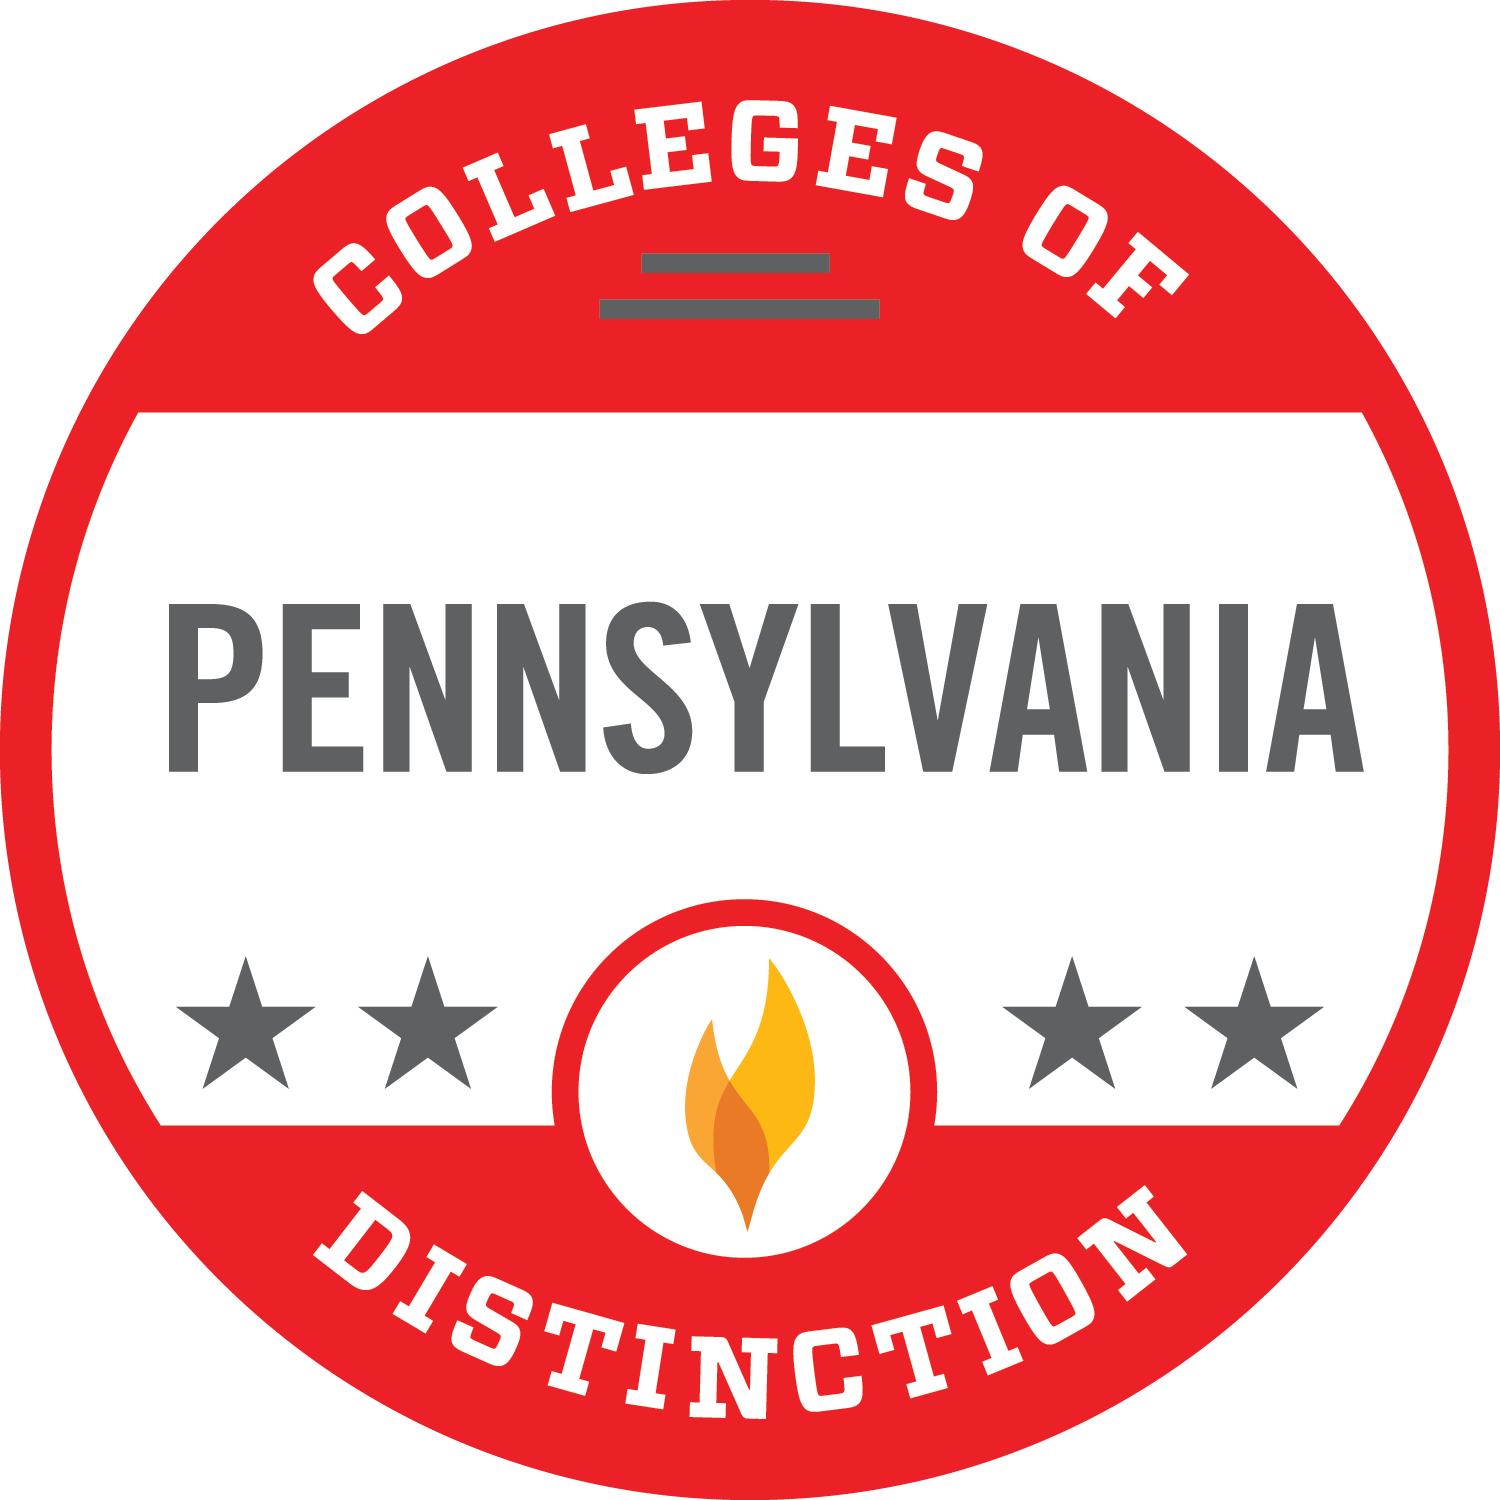 Pennsylvania College of Distinction 20-21 Badge